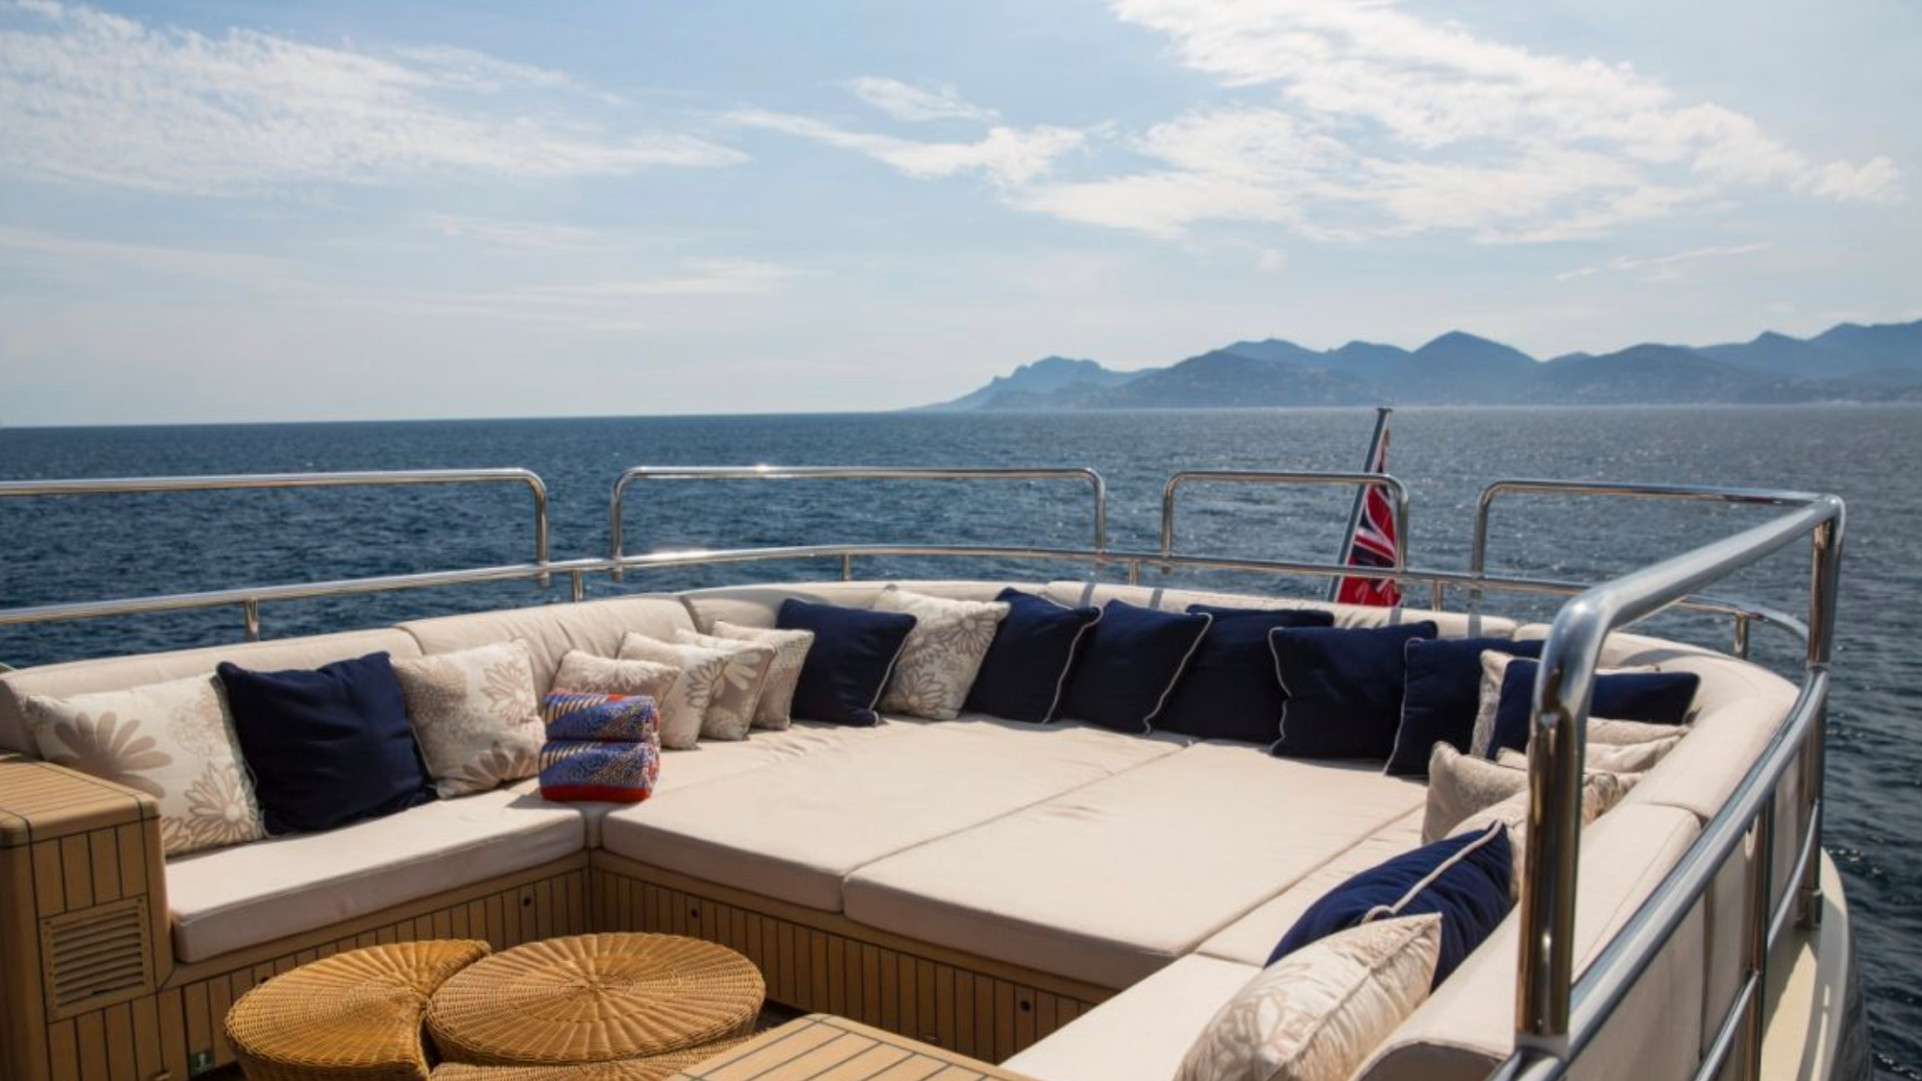 YCM 120 - Superyacht charter St Martin & Boat hire in Riviera, Corsica, Sardinia, Spain, Balearics, Caribbean 5